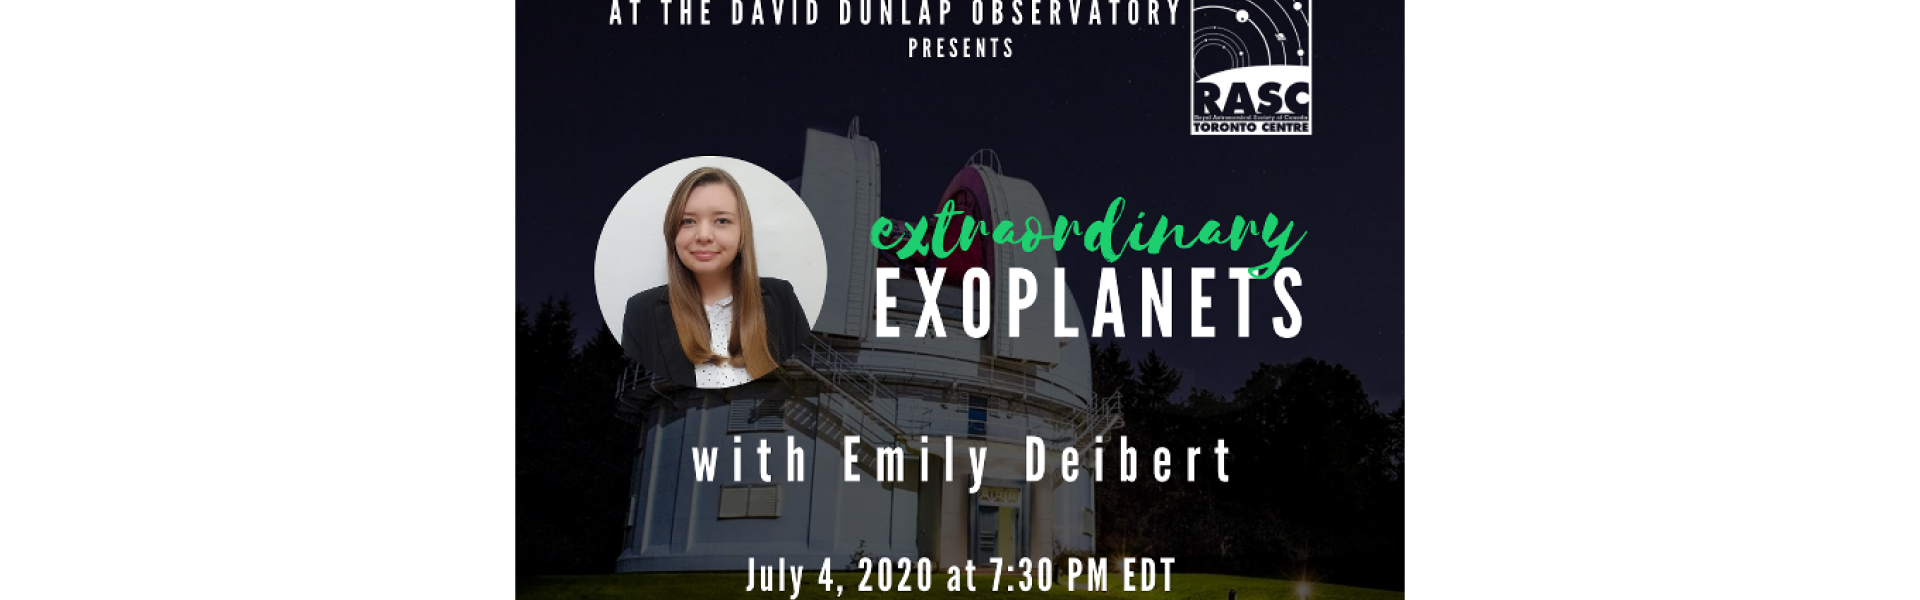 Extraordinary Exoplanets with Emily Deibert